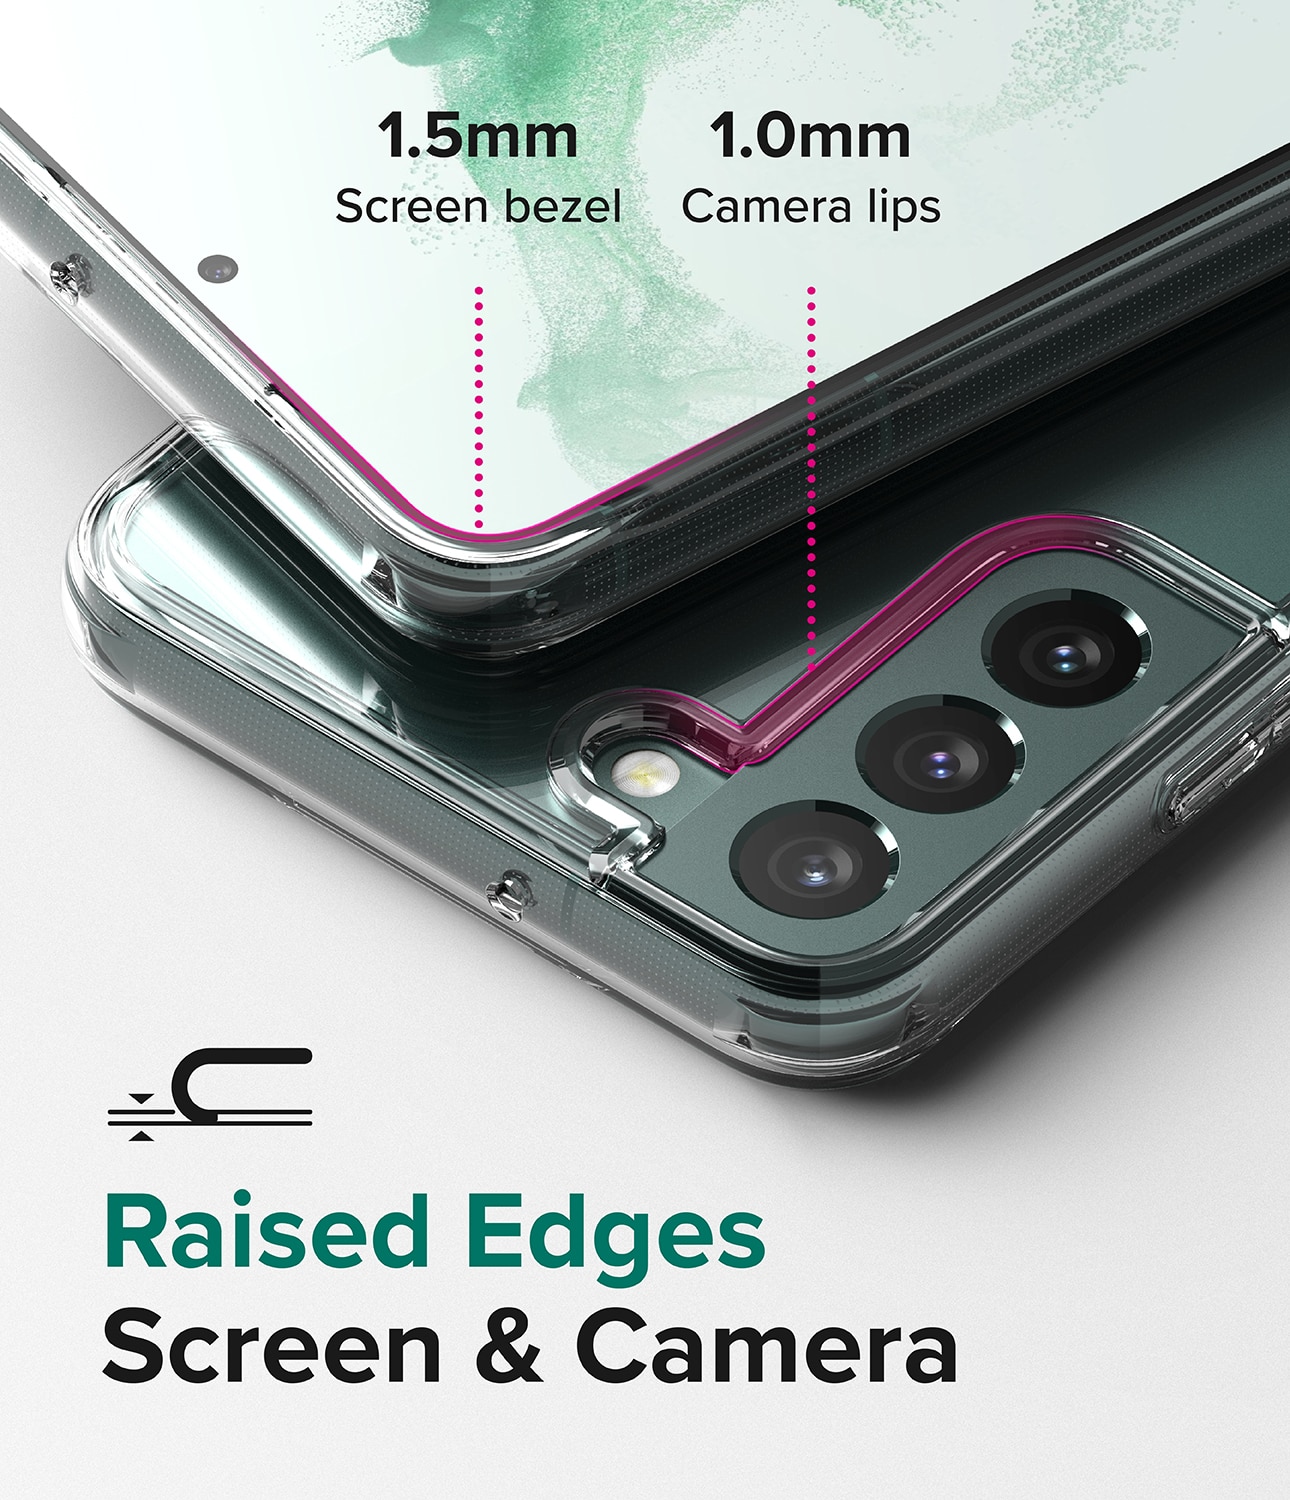 Samsung Galaxy S22 Fusion Case Clear